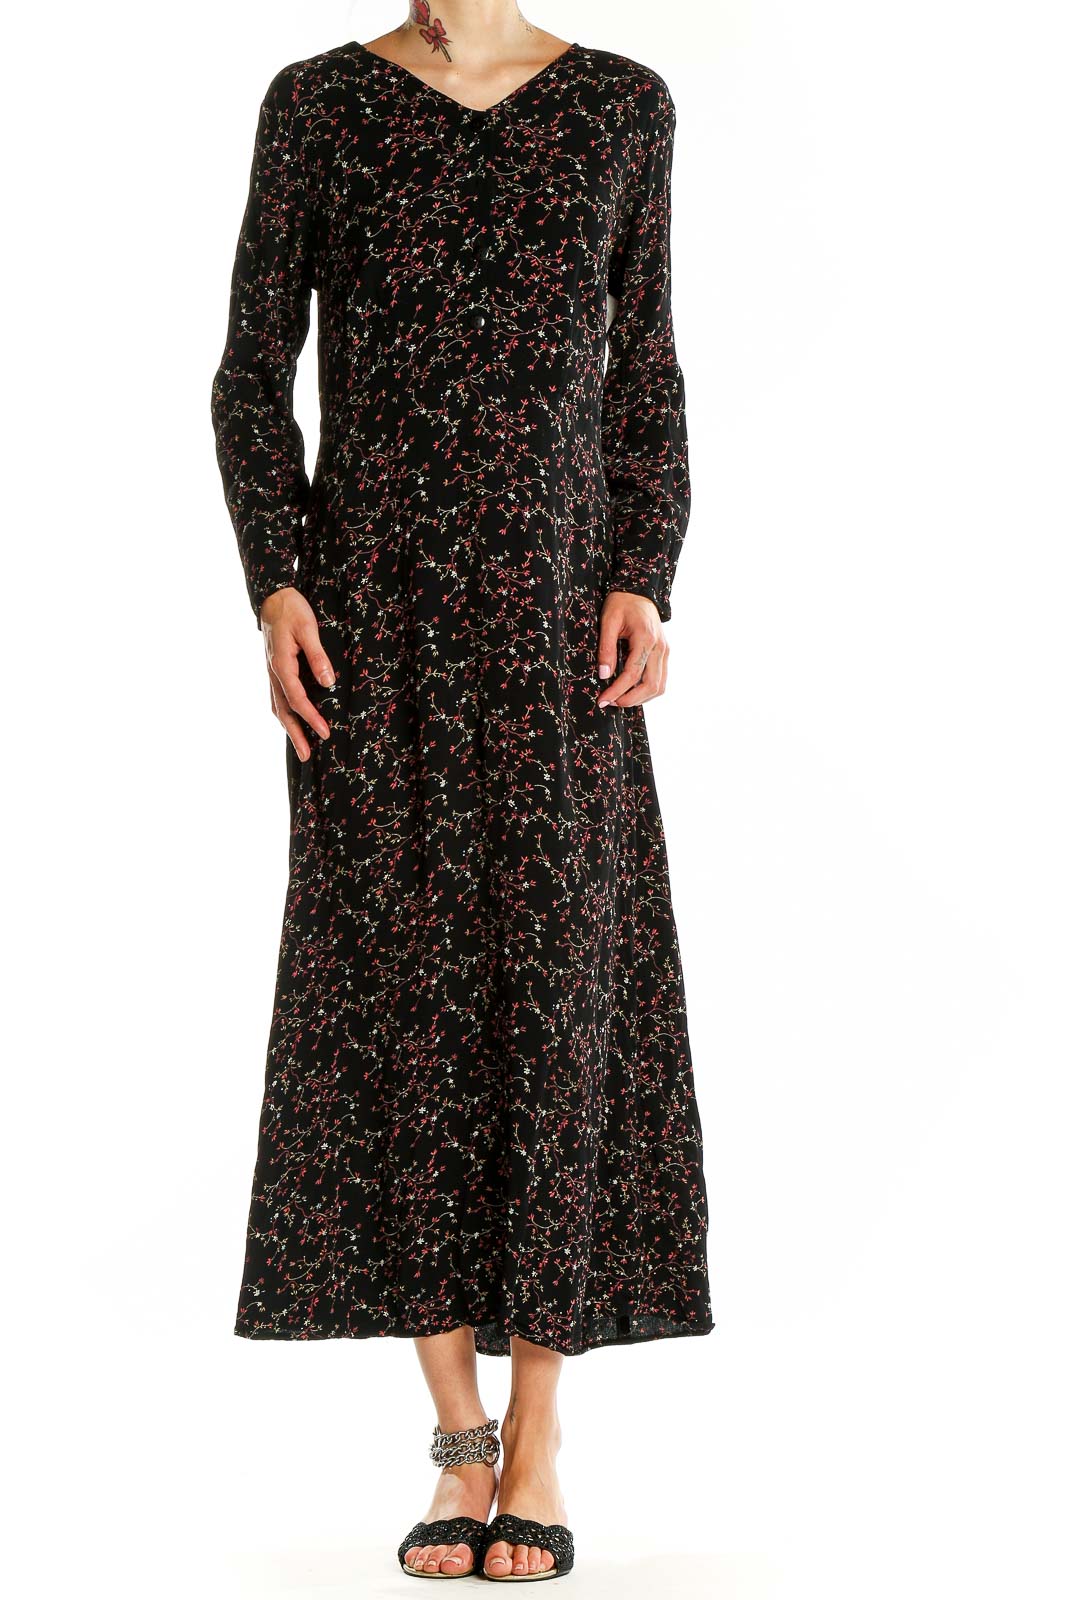 Black Long Sleeve Bohemian Floral Print Midi Dress Front